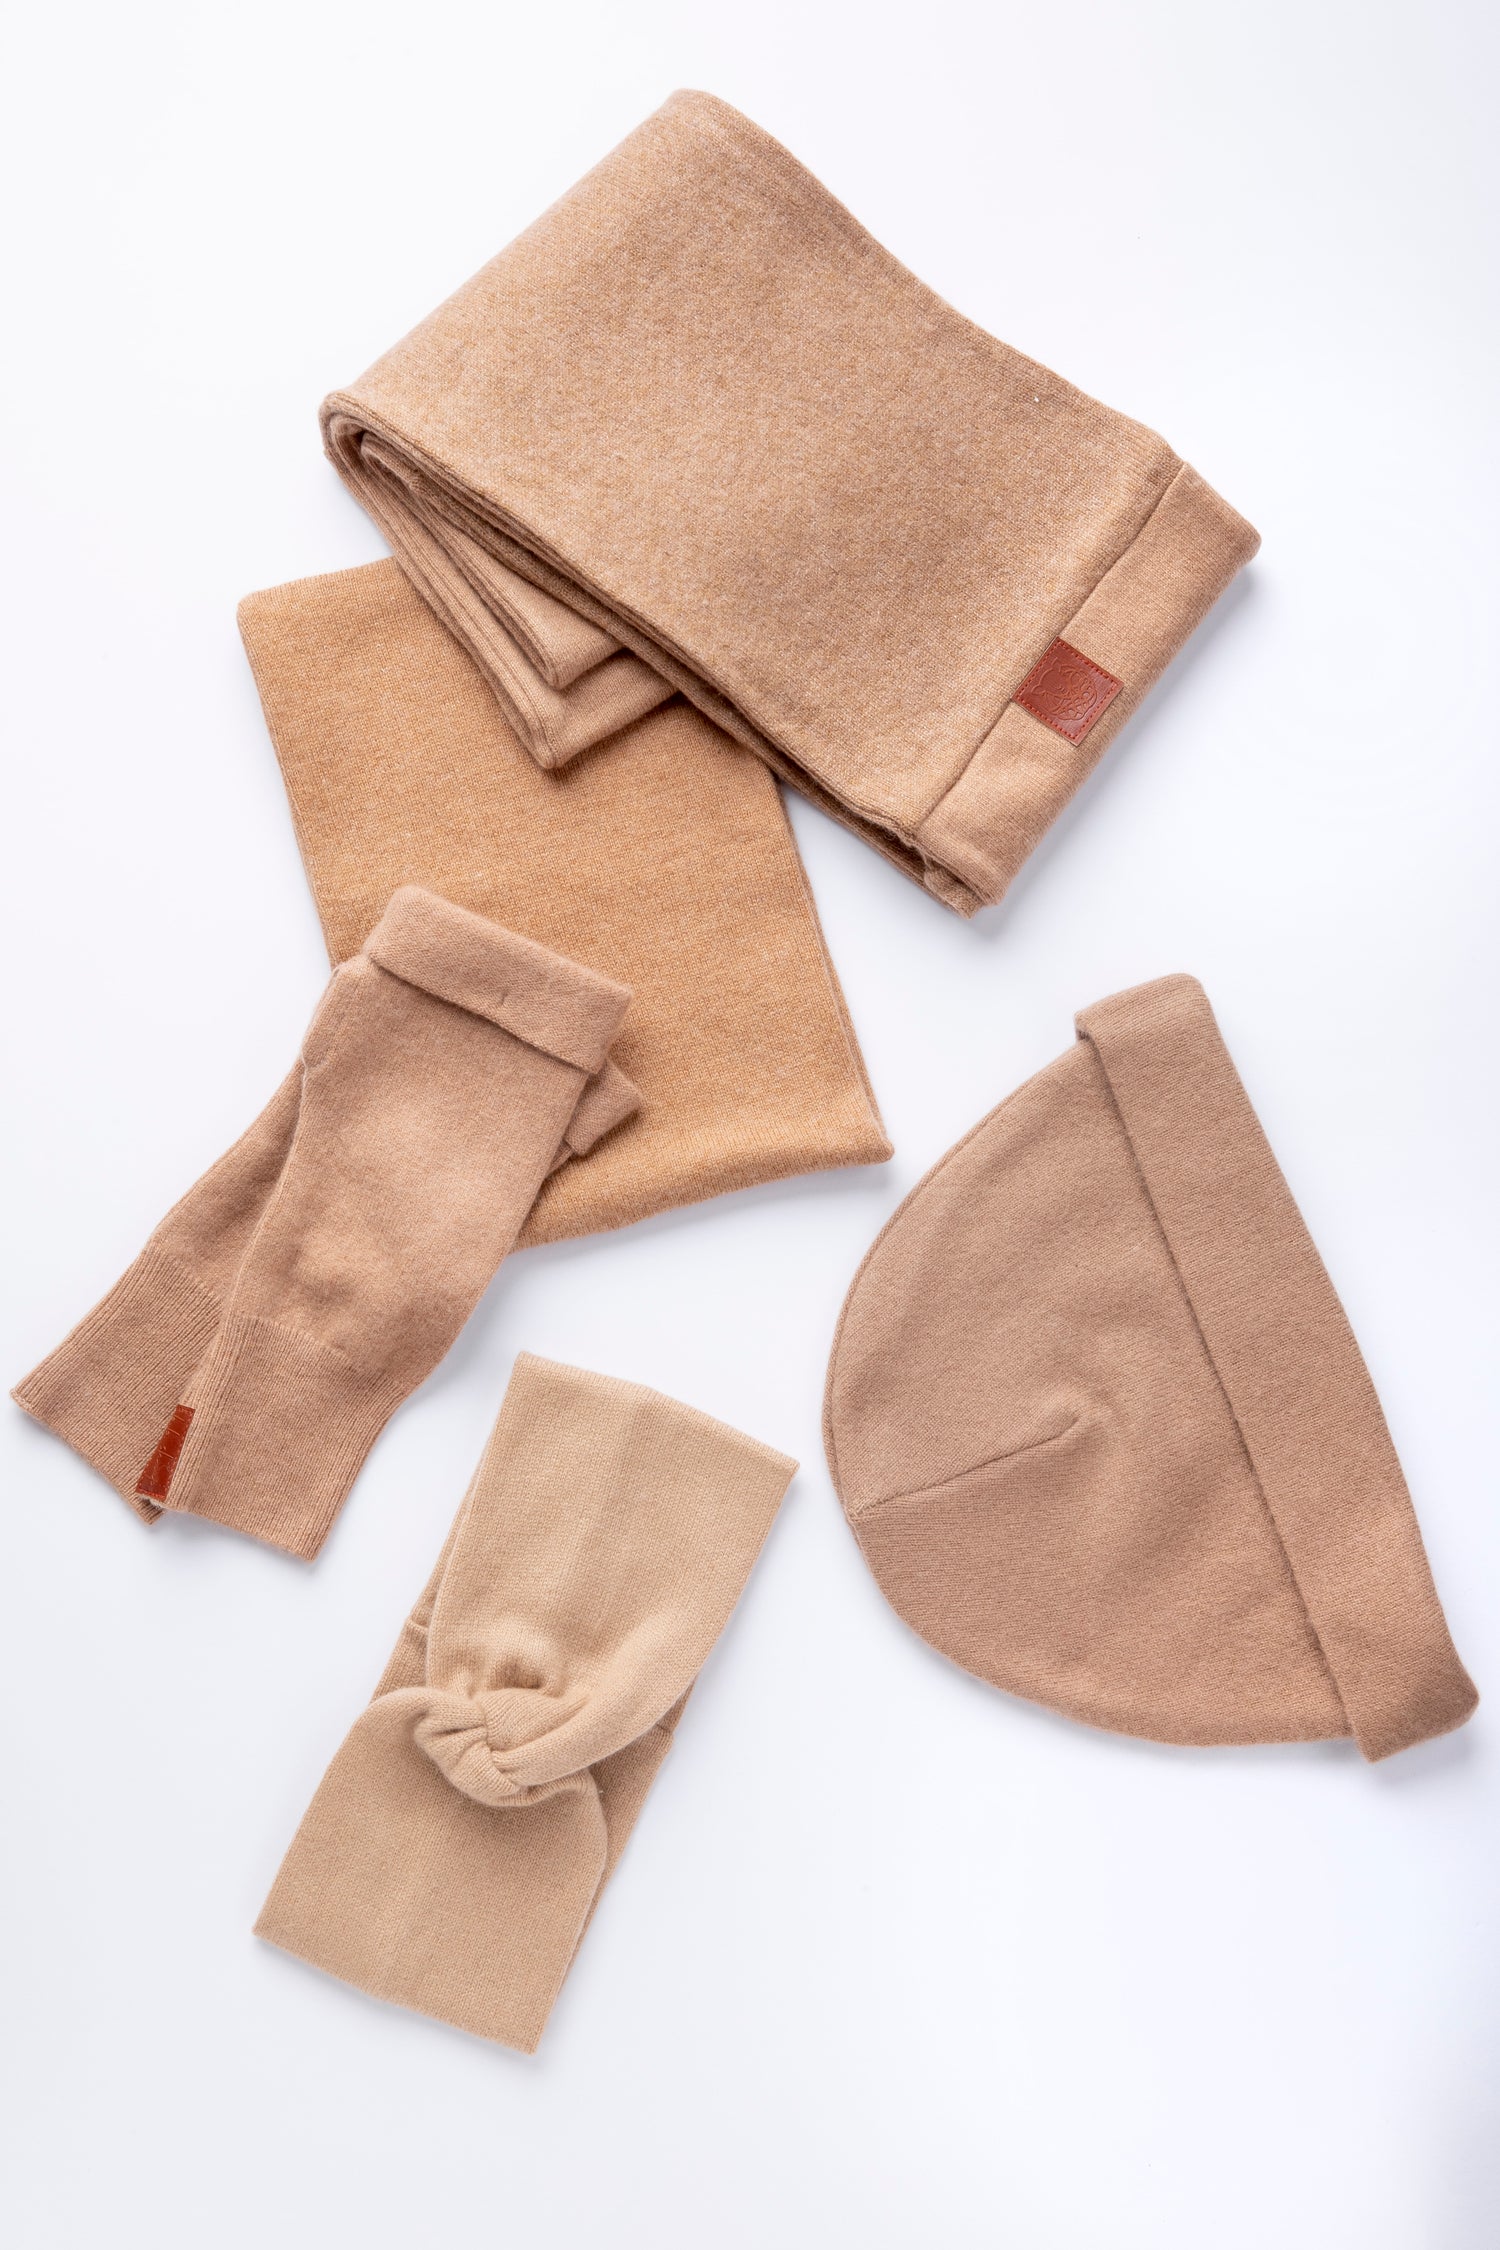 Camel - Winter Ready Box - Fingerless gloves, Headband, Infinity scarf, Beanie, Neck warmer